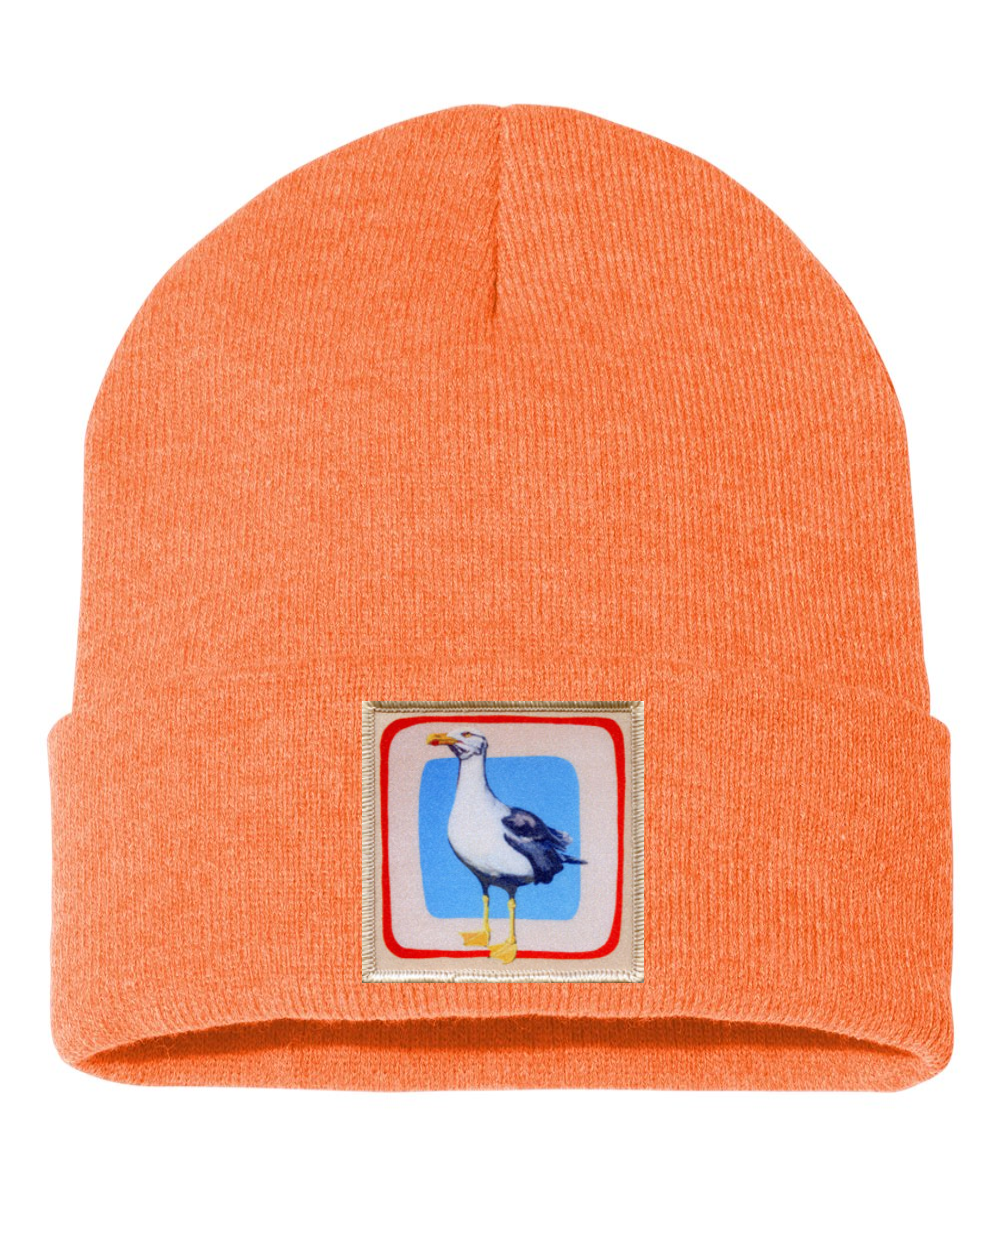 Seagull Hats FlynHats Heather Orange  